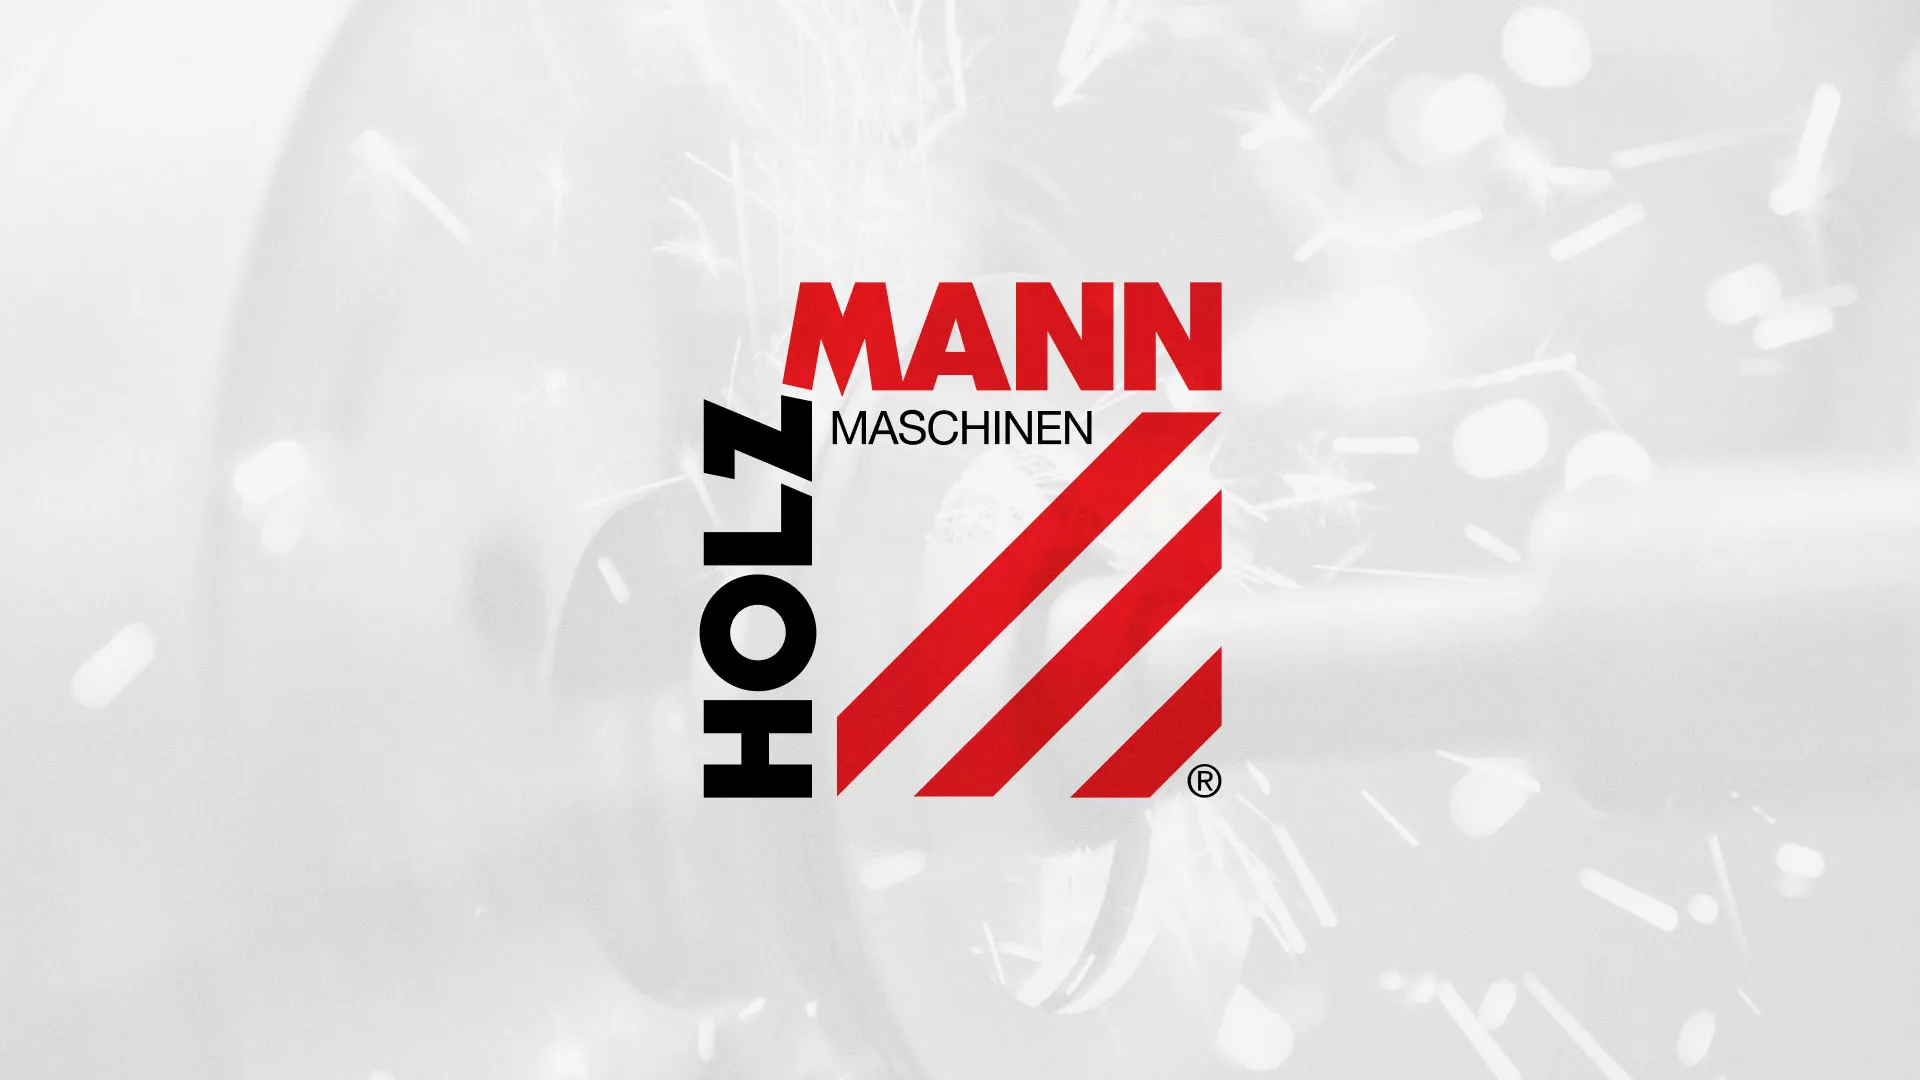 Создание сайта компании «HOLZMANN Maschinen GmbH» в Камешково